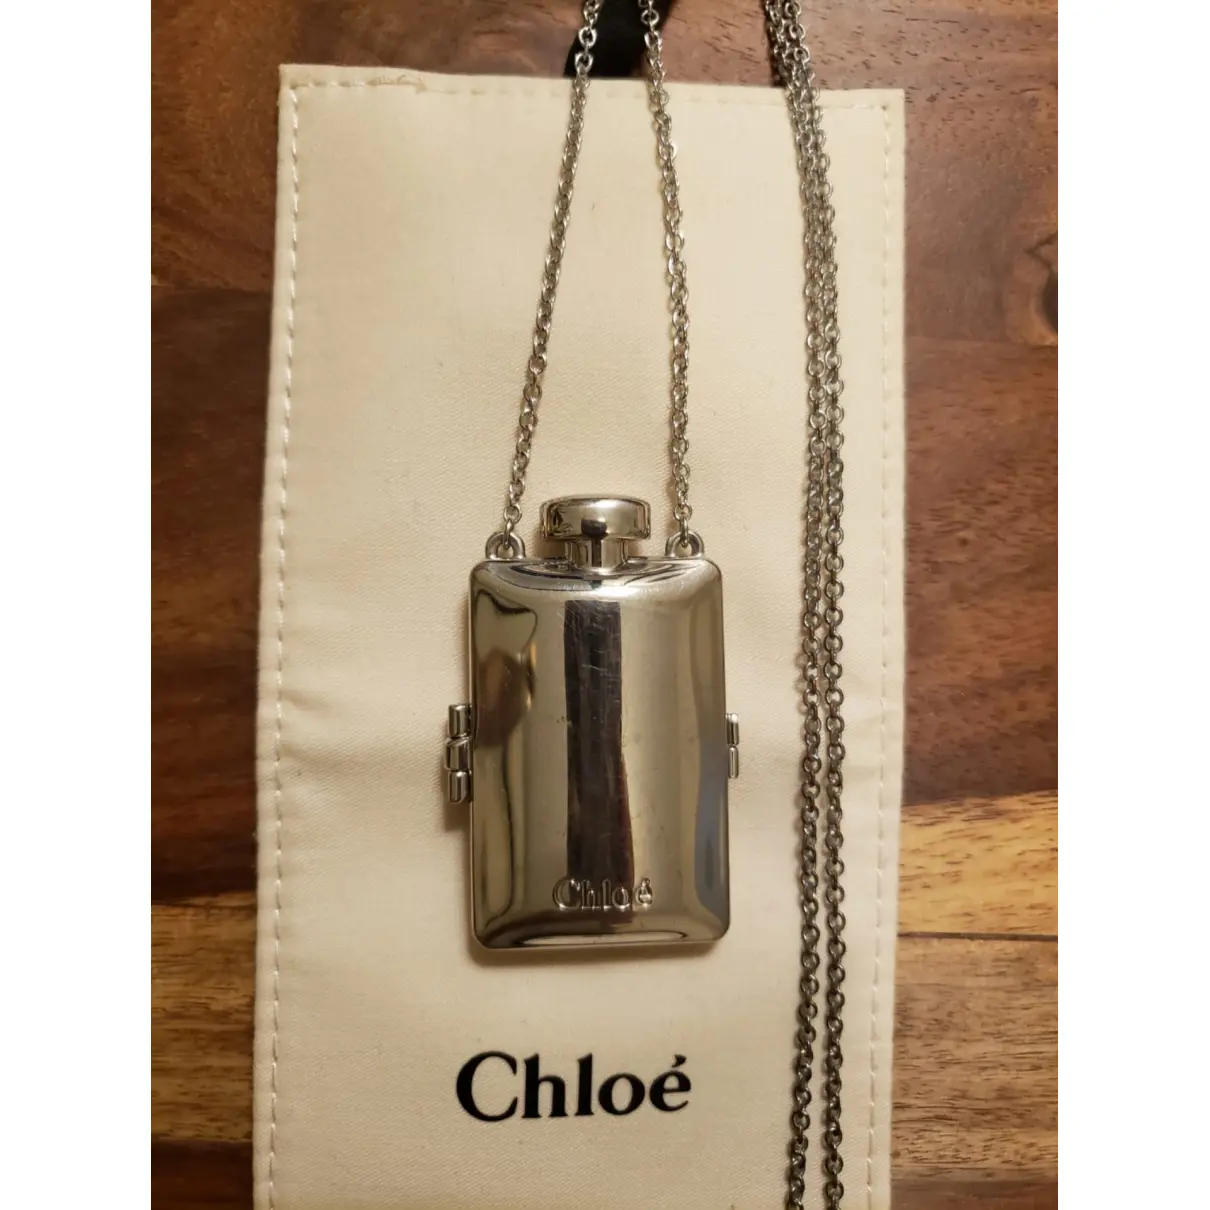 Buy Chloé Long necklace online